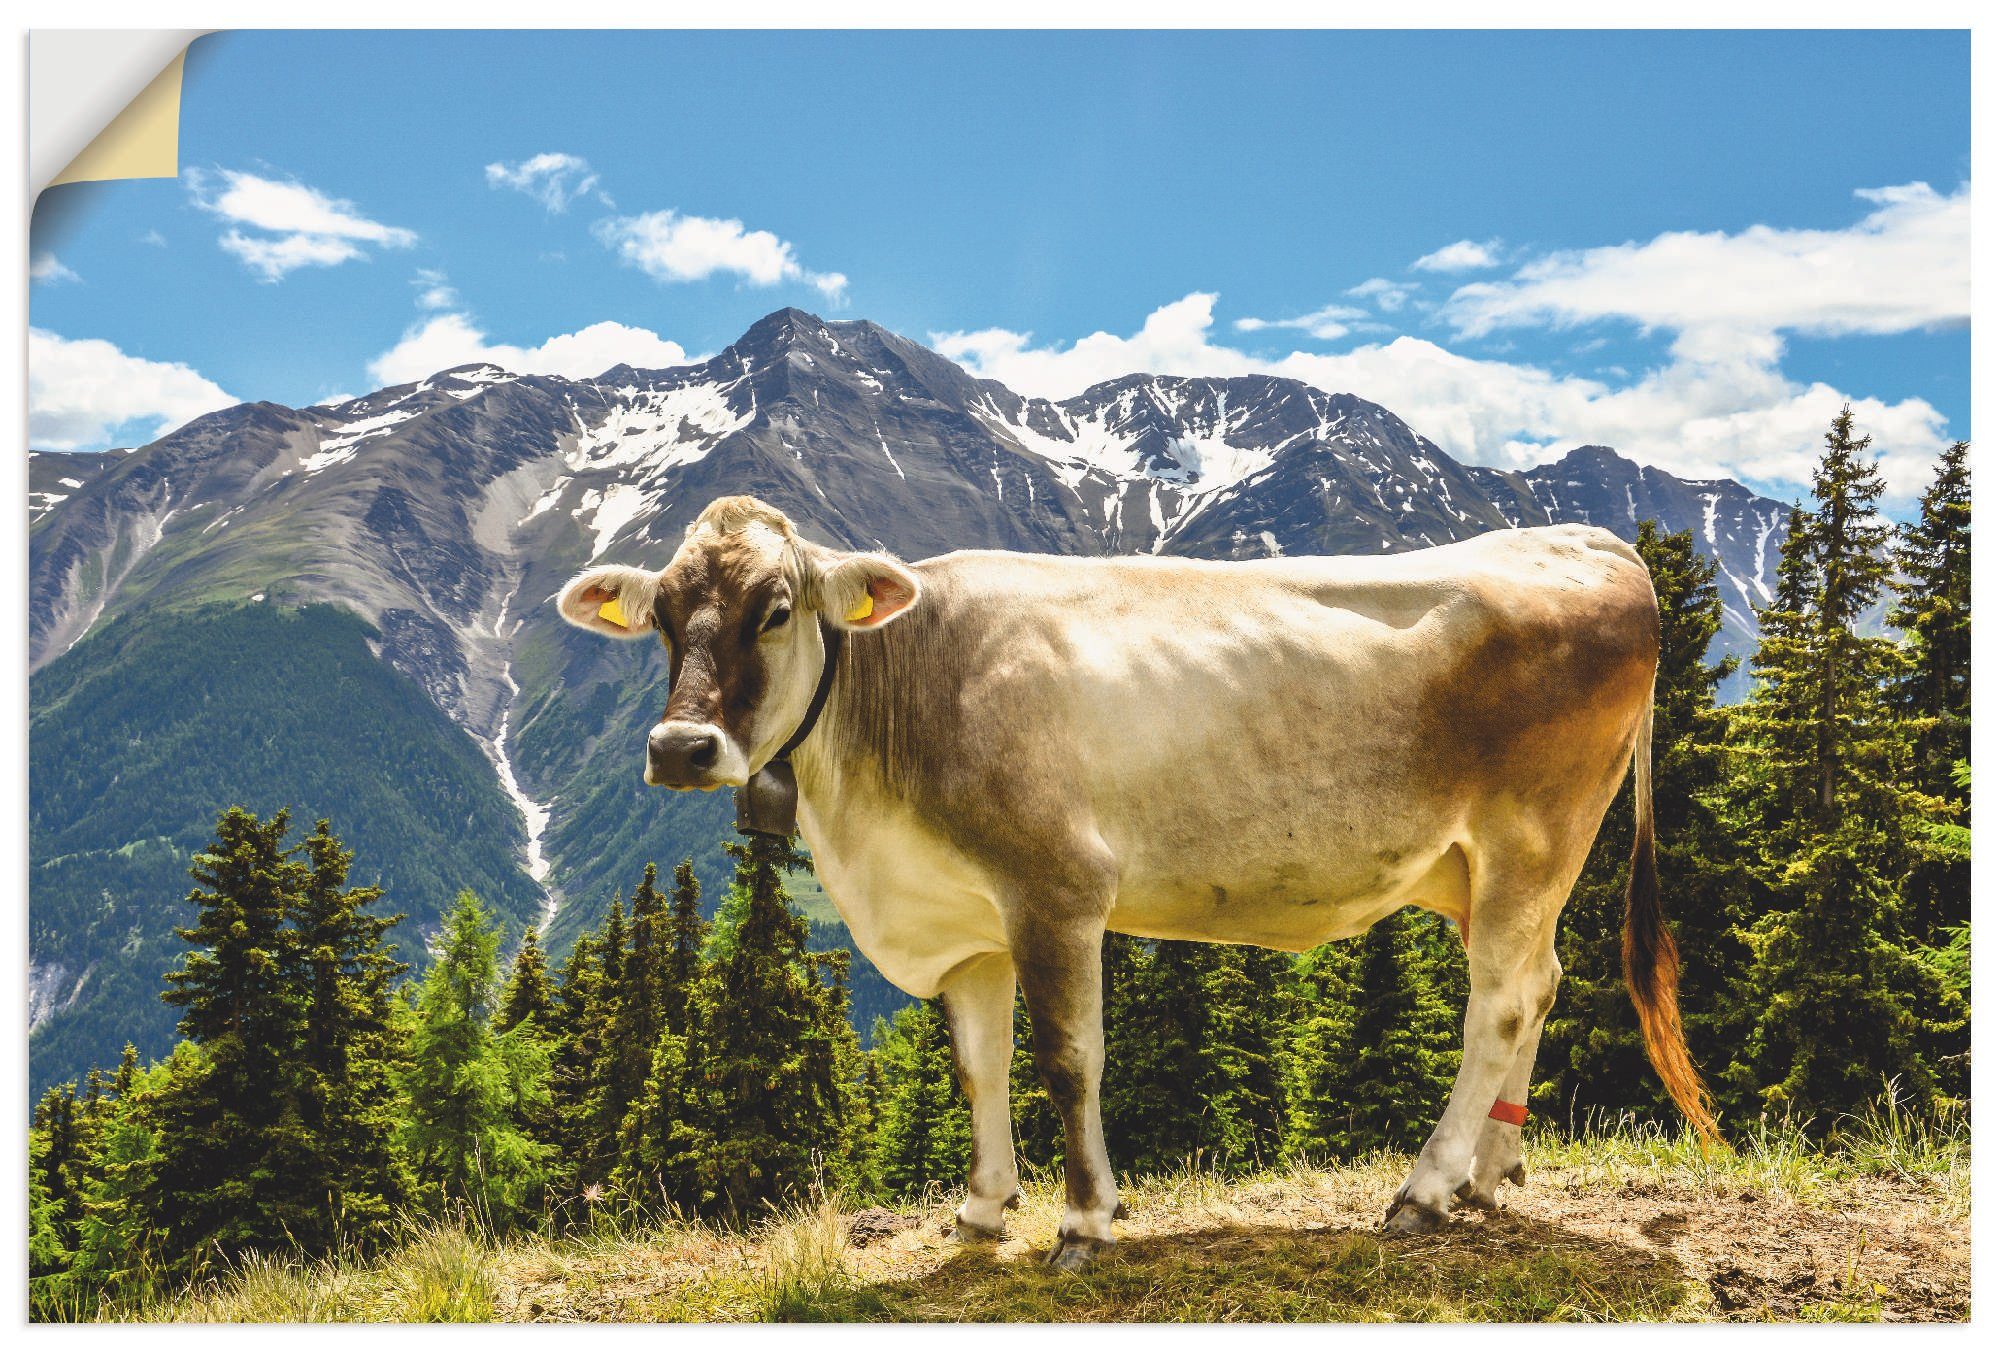 Artland Wandbild Bergkuh in den Alpen im Sommer, Haustiere (1 St), als Alubild, Leinwandbild, Wandaufkleber oder Poster in versch. Größen